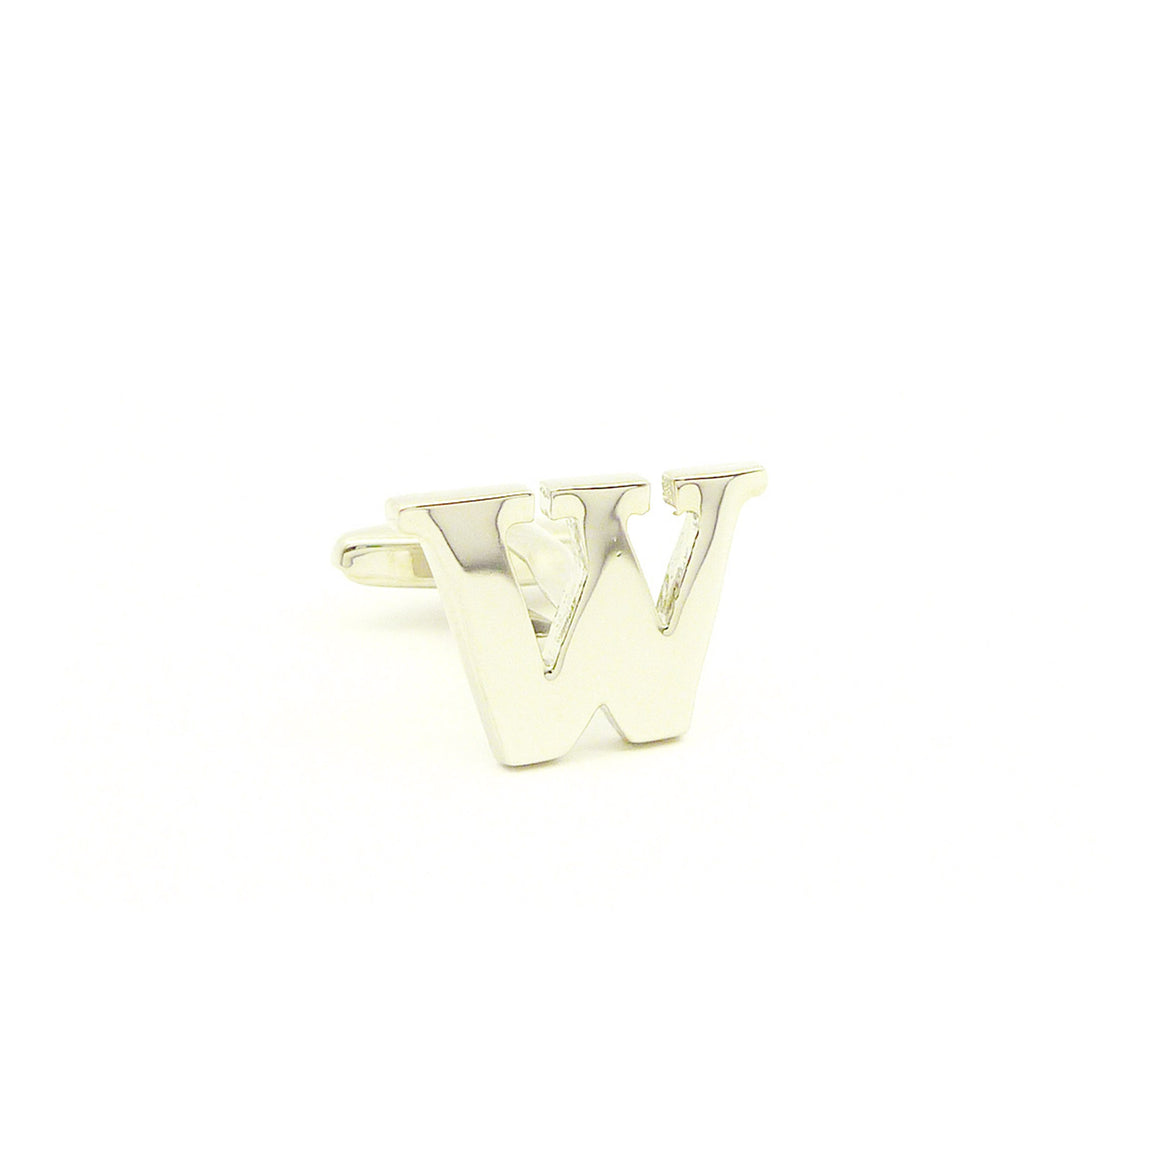 Wild Links - Silver Alphabet Letter "W" Cufflinks